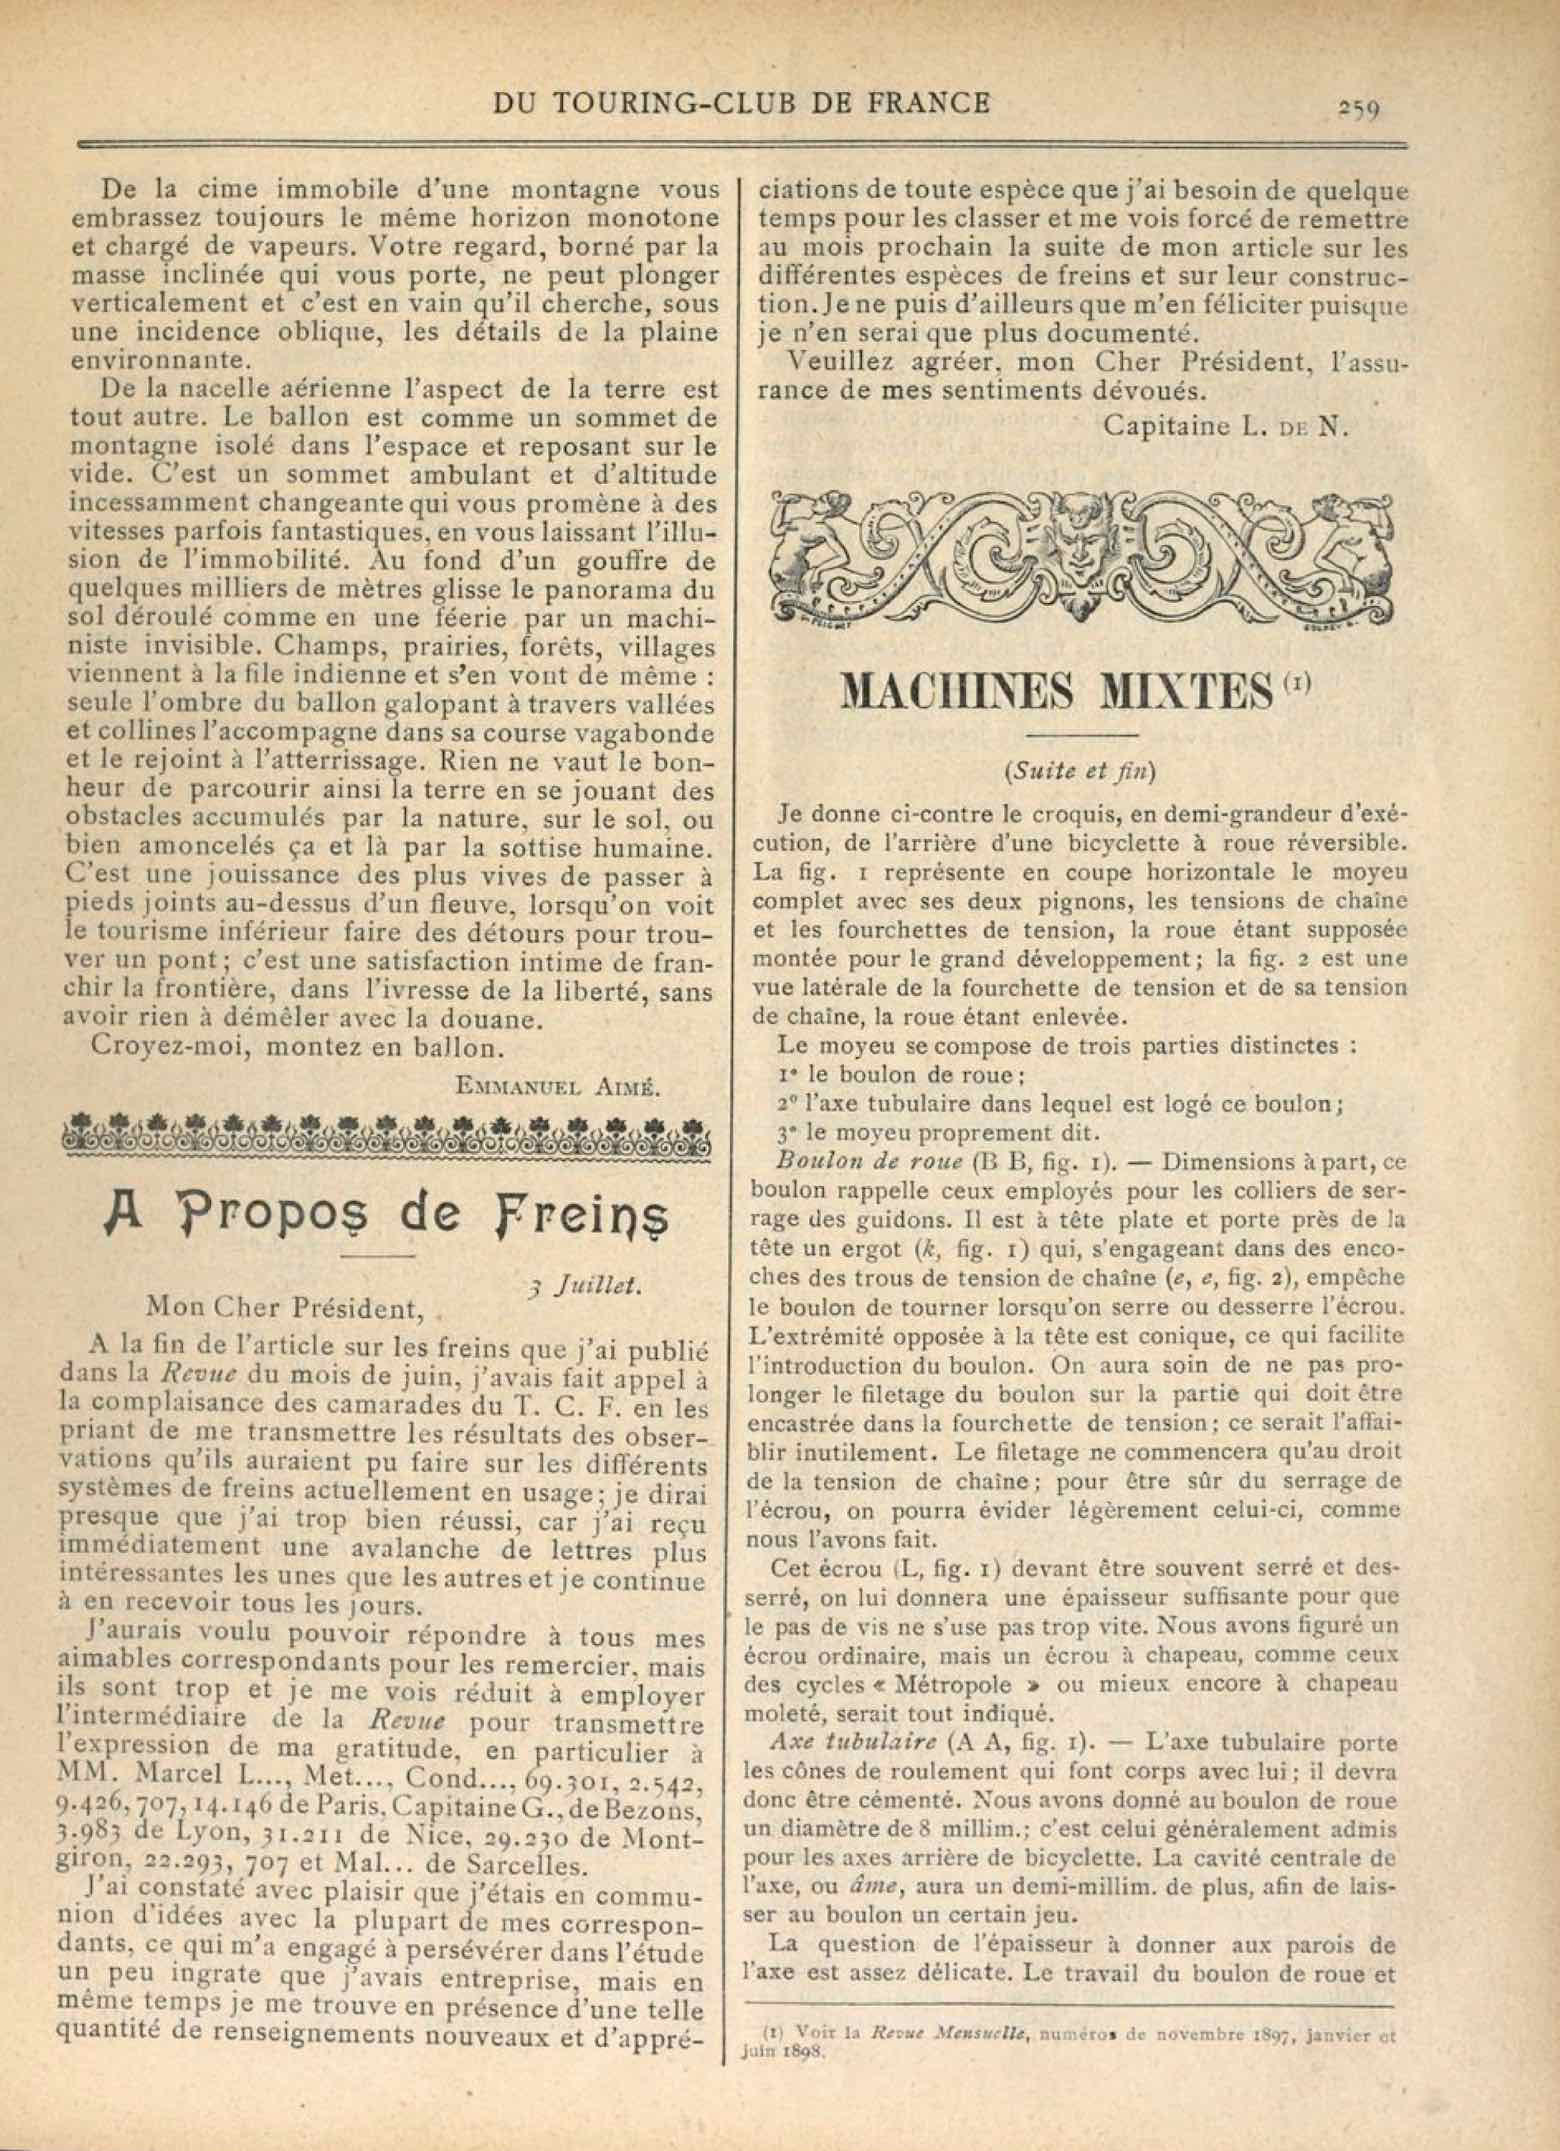 T.C.F. Revue Mensuelle July 1898 - Machines Mixtes (part IV) scan 1 main image